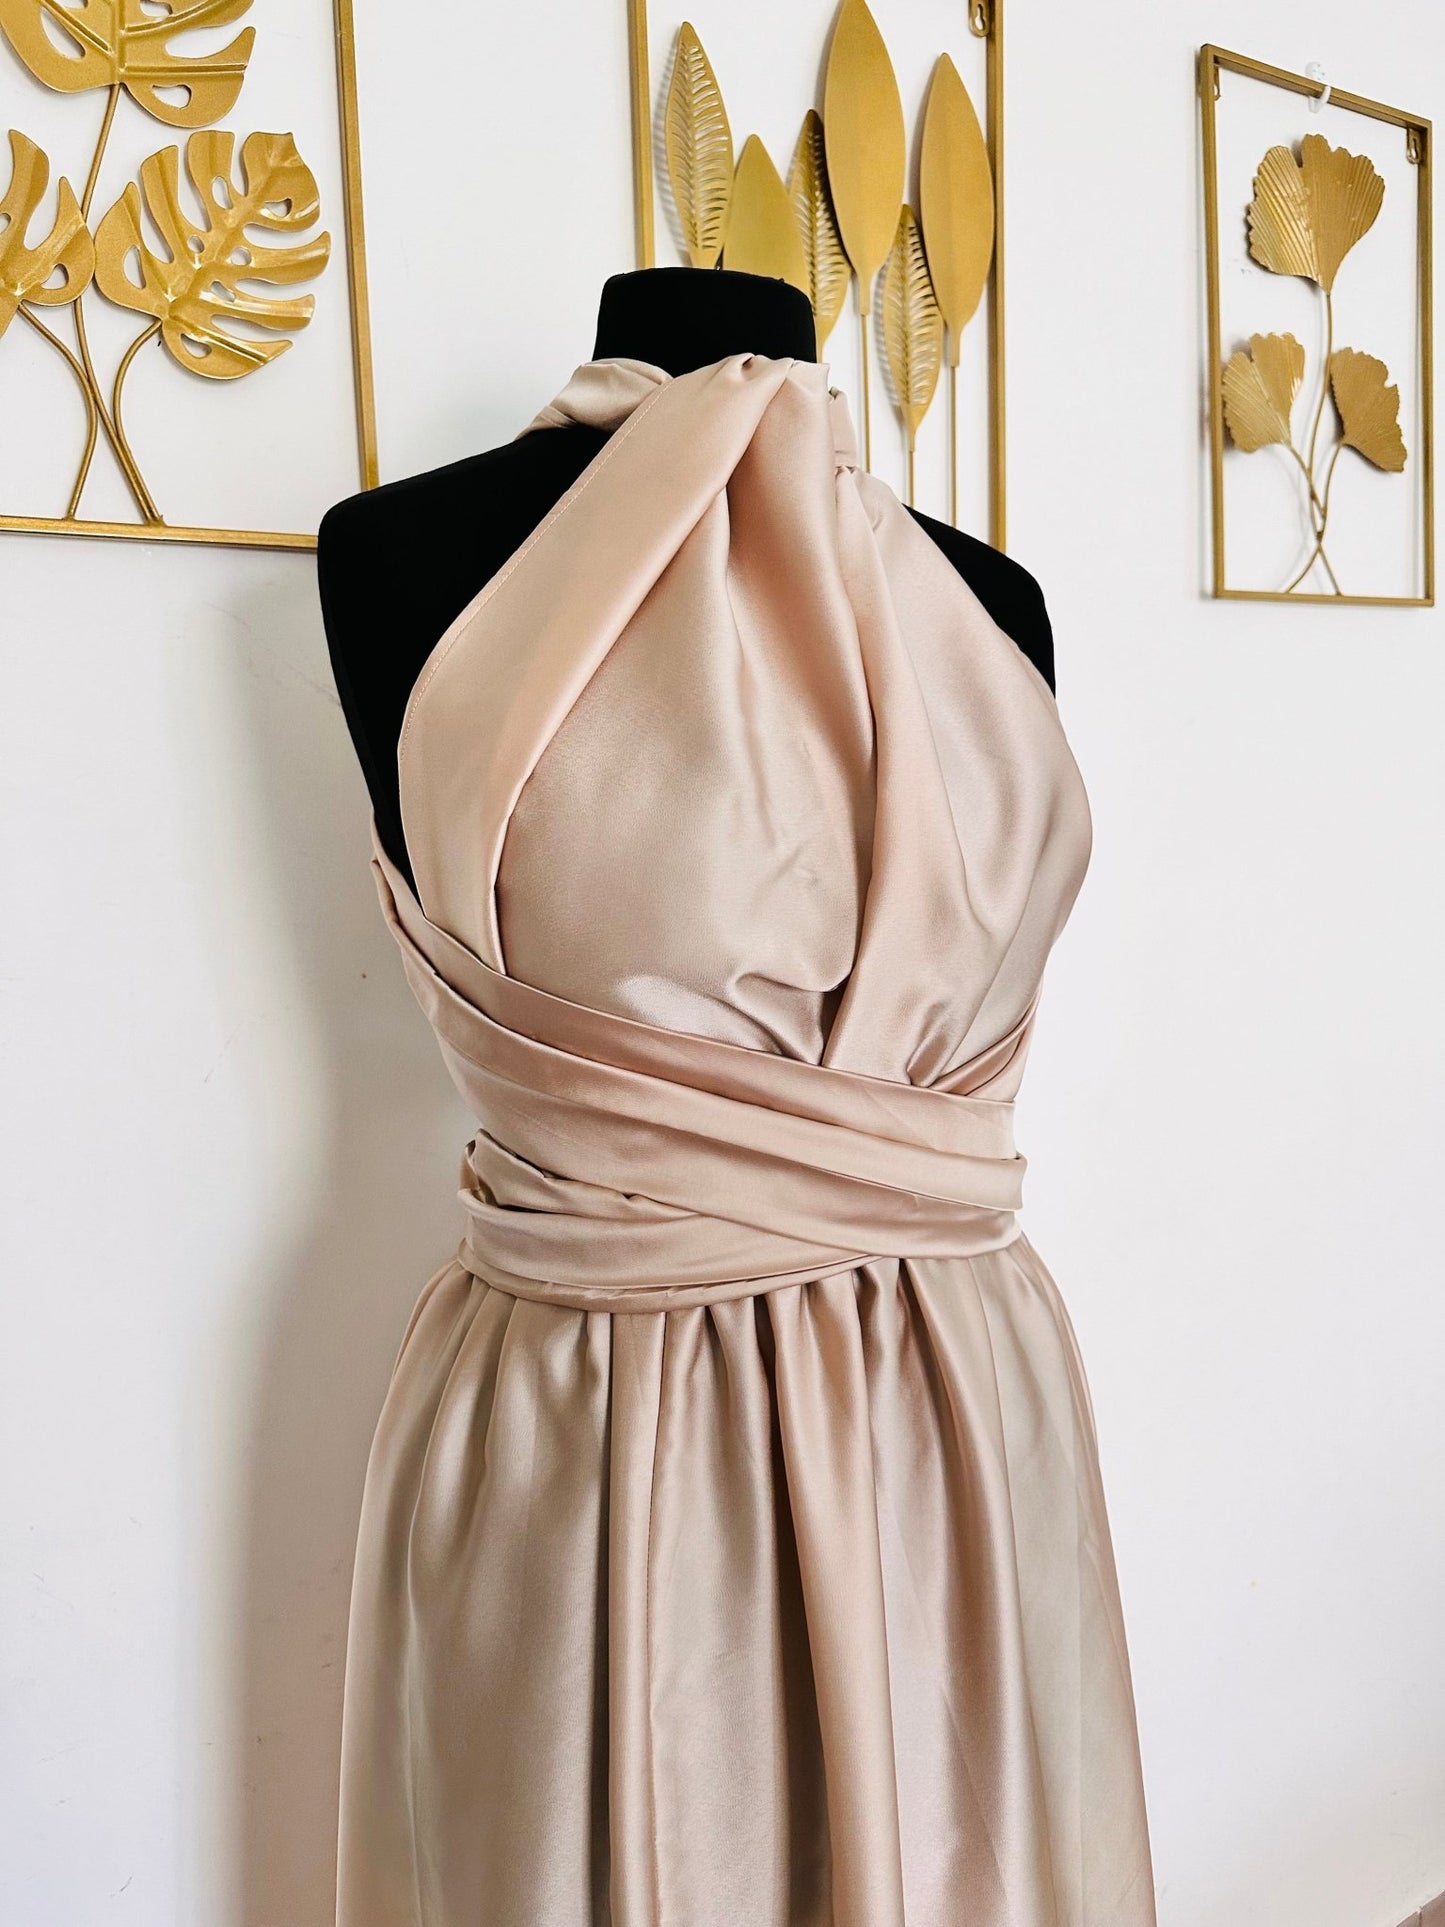 Robe convertible en Satin - Robe Infinity - Choix de couleur - Robe Fendu en satin - Kaysol Couture